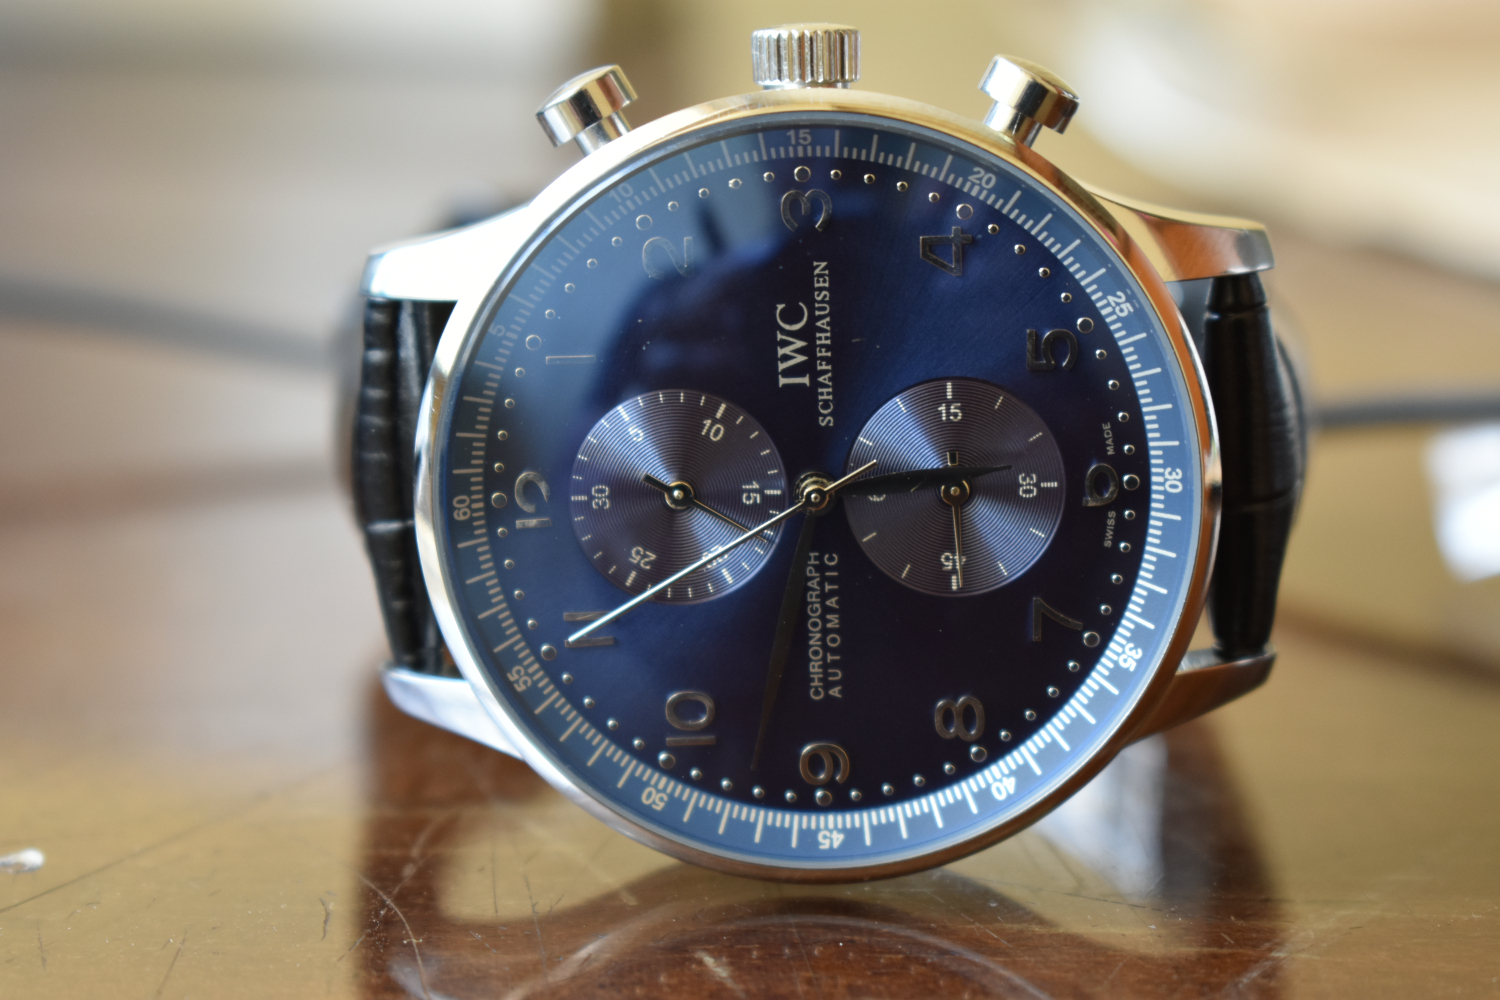 I W C Portuguese Chronograph Watch, Blue Dial Black Leather Strap I W 371615 for sale in Nairobi,Kenya.